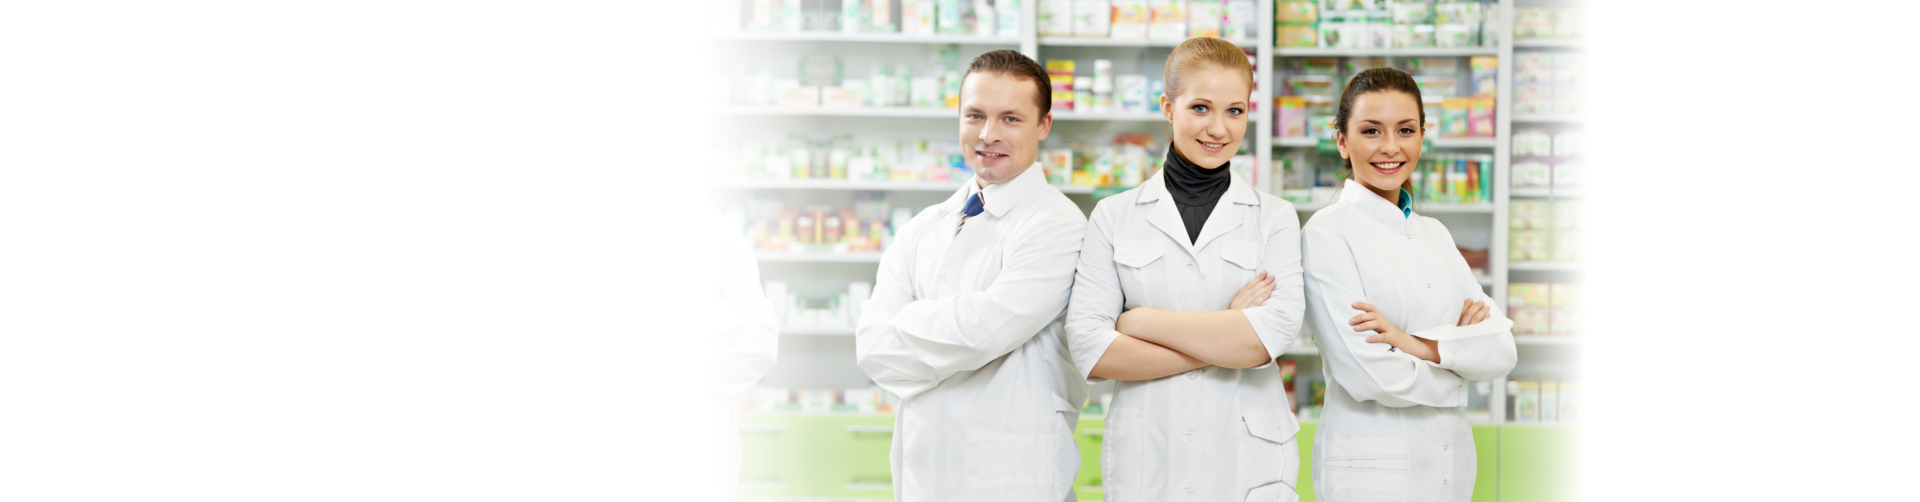 three pharmacists smiling